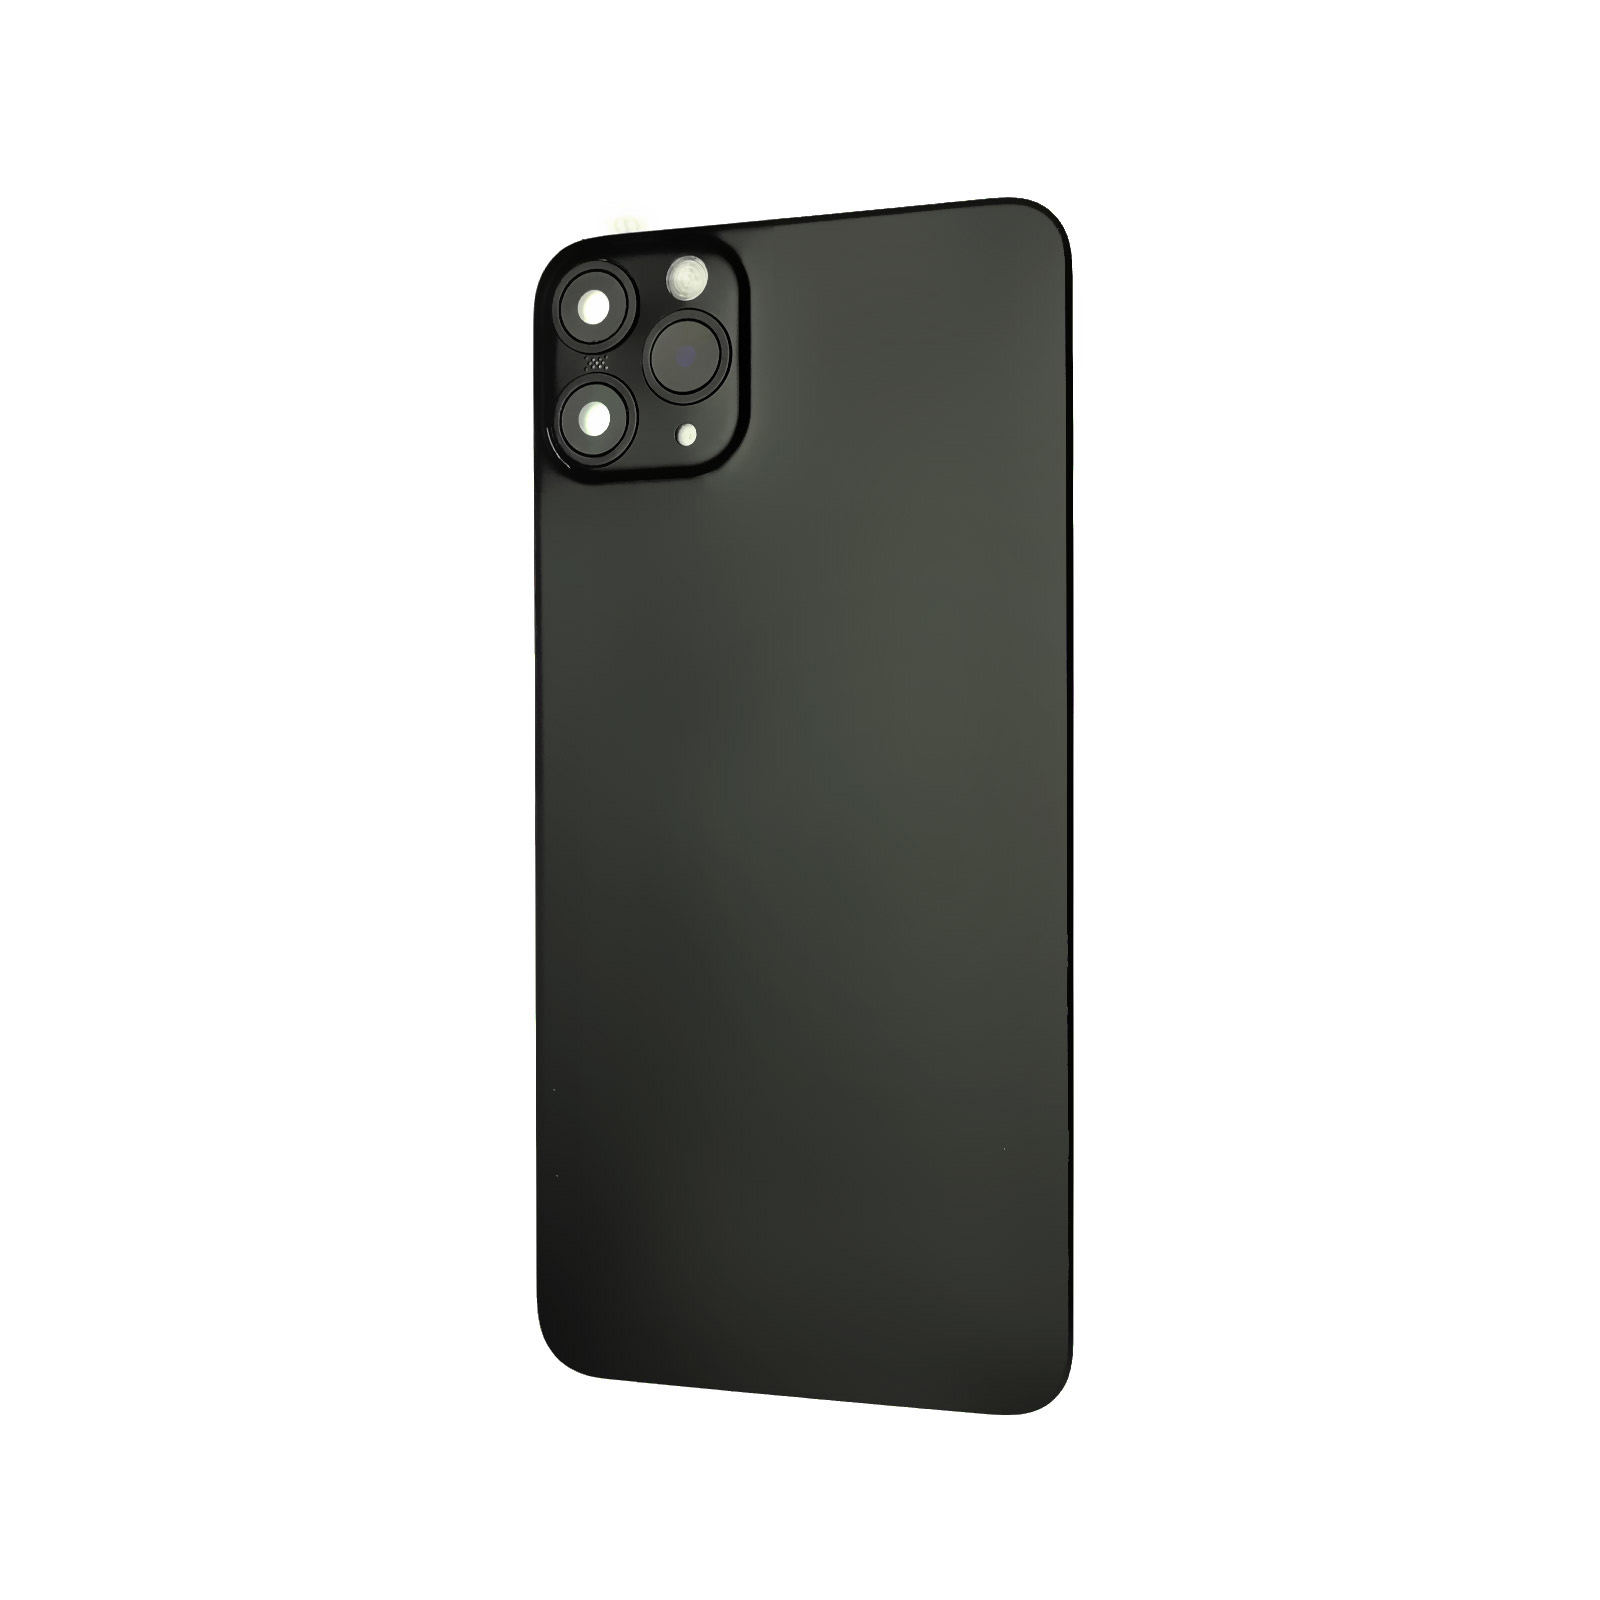 Защитная пленка на заднюю камеру для APPLE iPhone XS MAX обманка на Apple iPhone 11 Pro MAX, цвет черный.